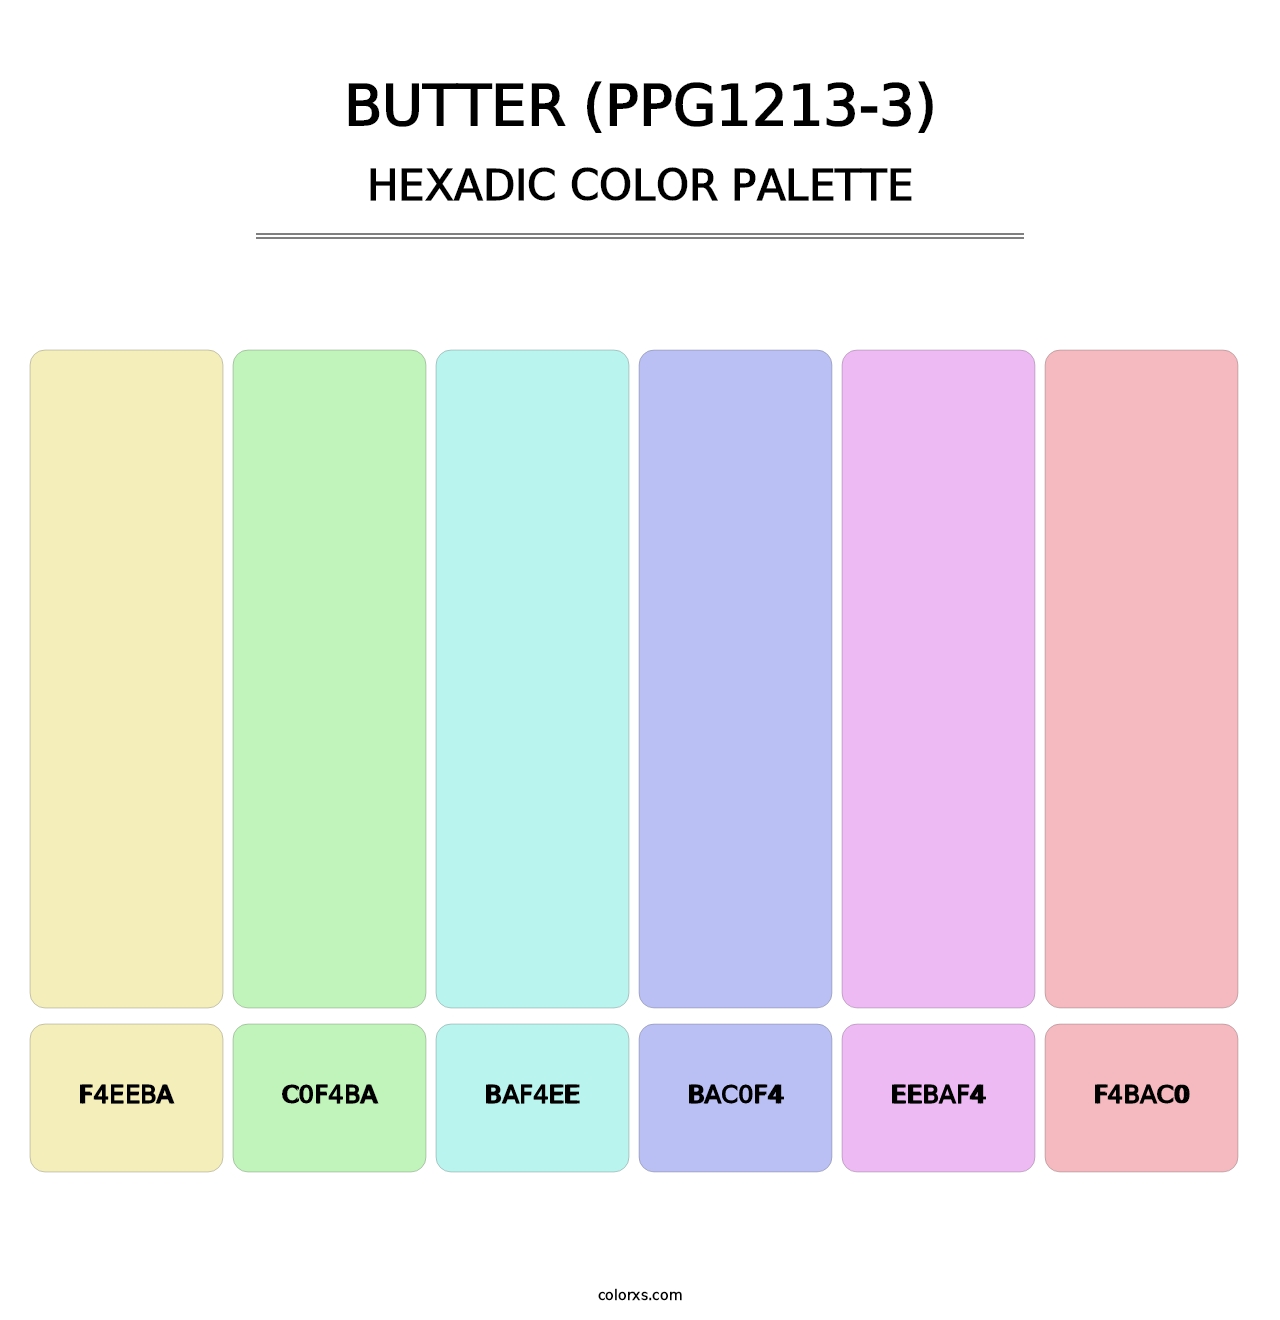 Butter (PPG1213-3) - Hexadic Color Palette